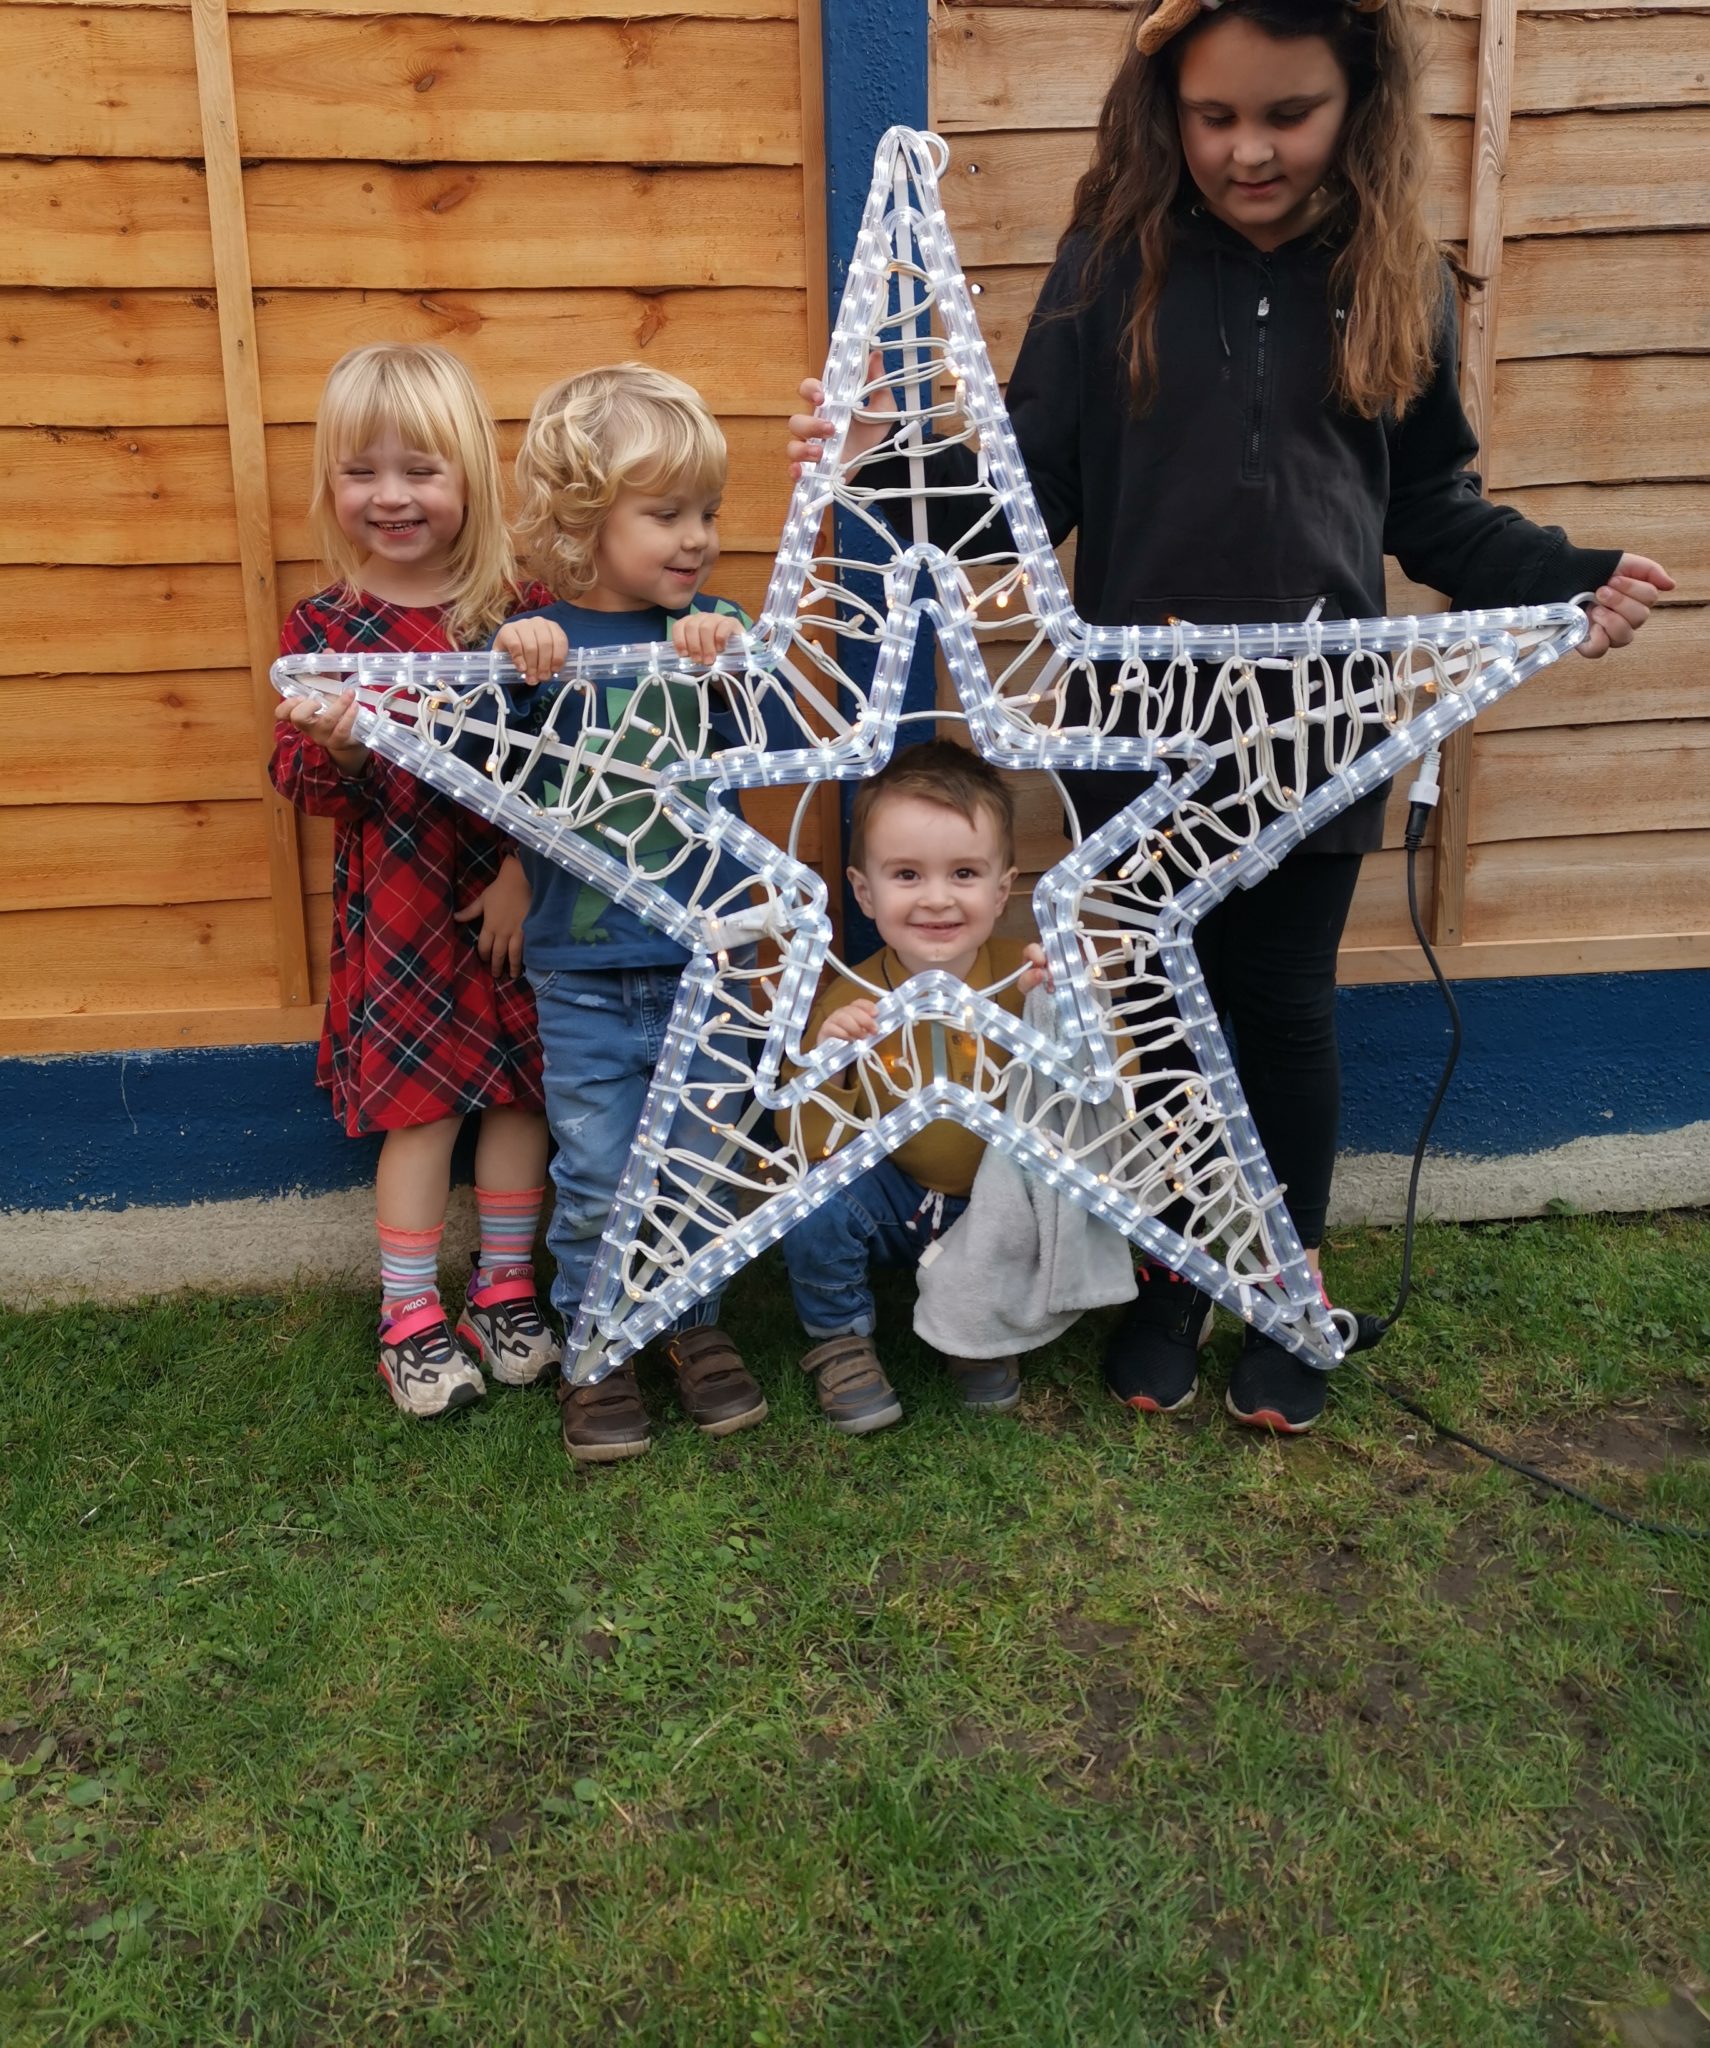 The Cross family's Christmas Star